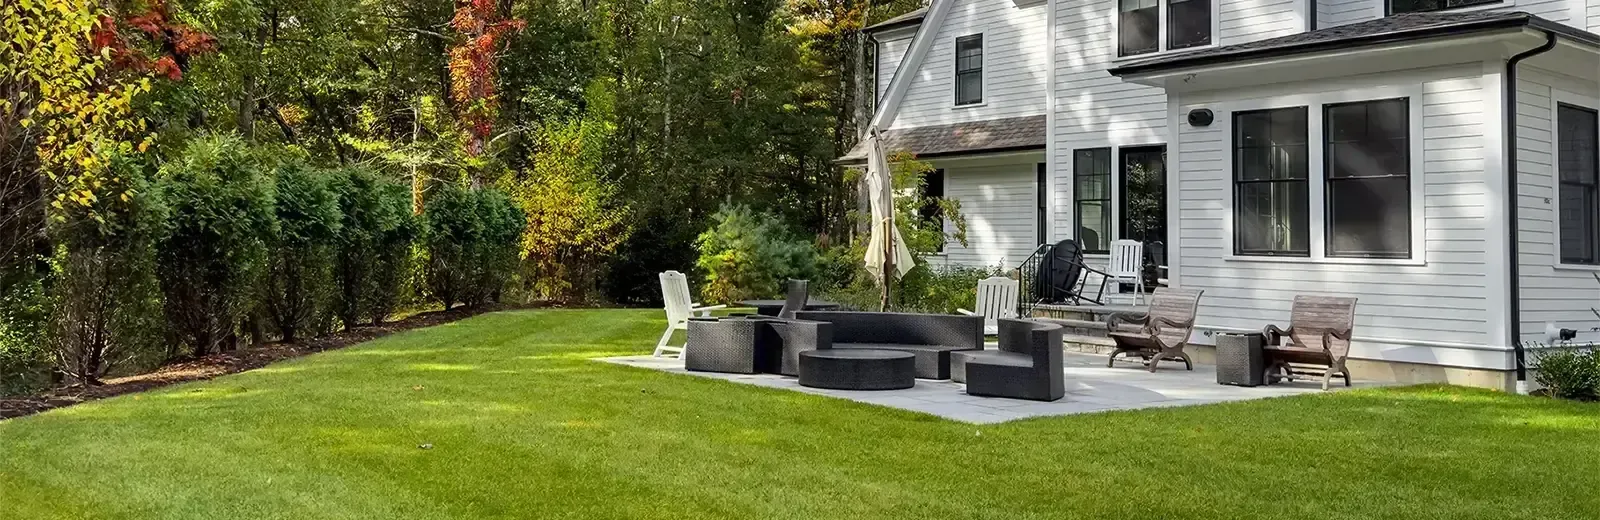 a Lush green bug-free backyard